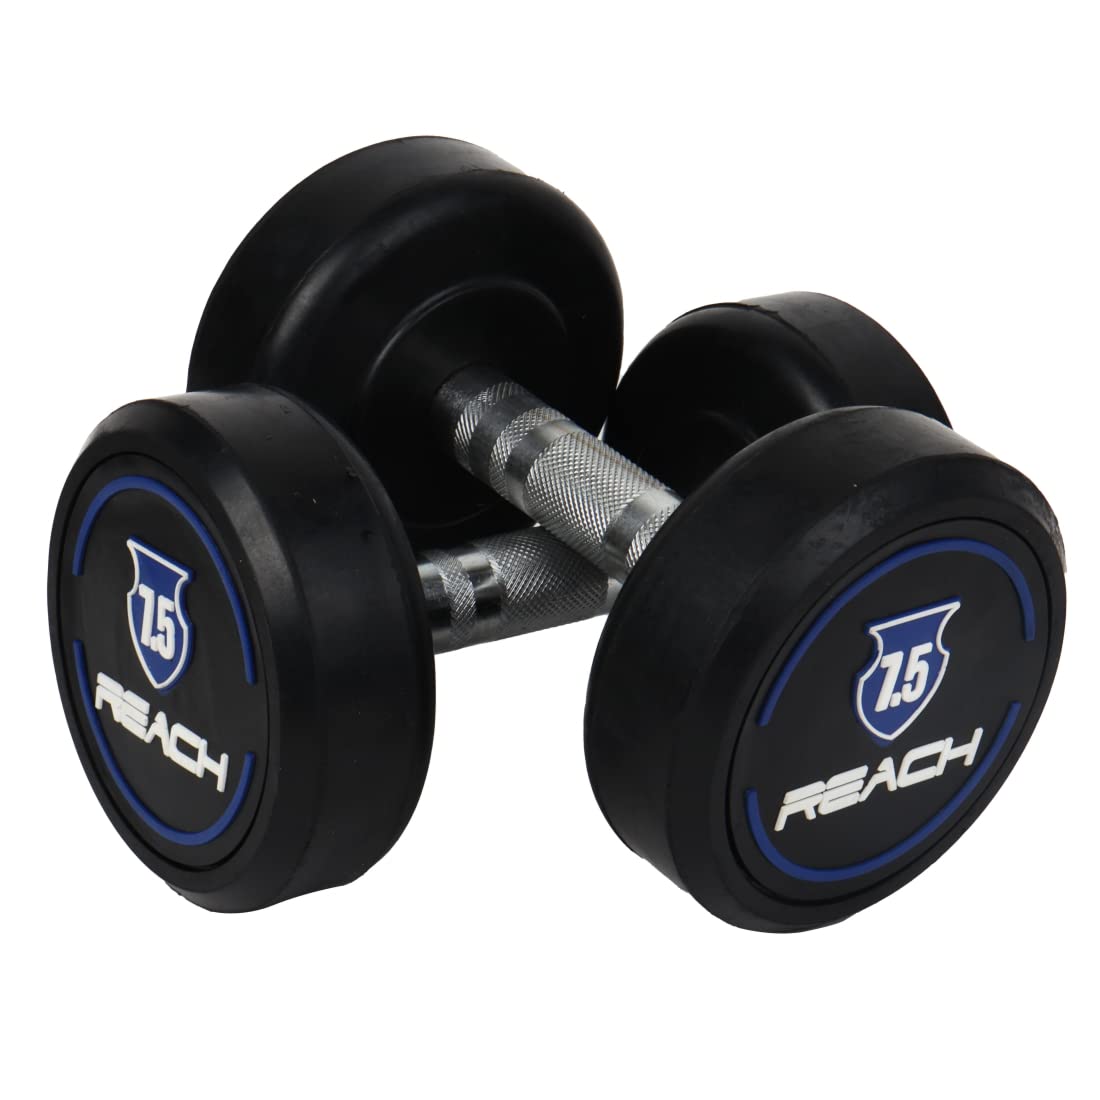 Reach Round Rubber Dumbbells 7.5 Kg Set of 2 for Men & Women | Gym